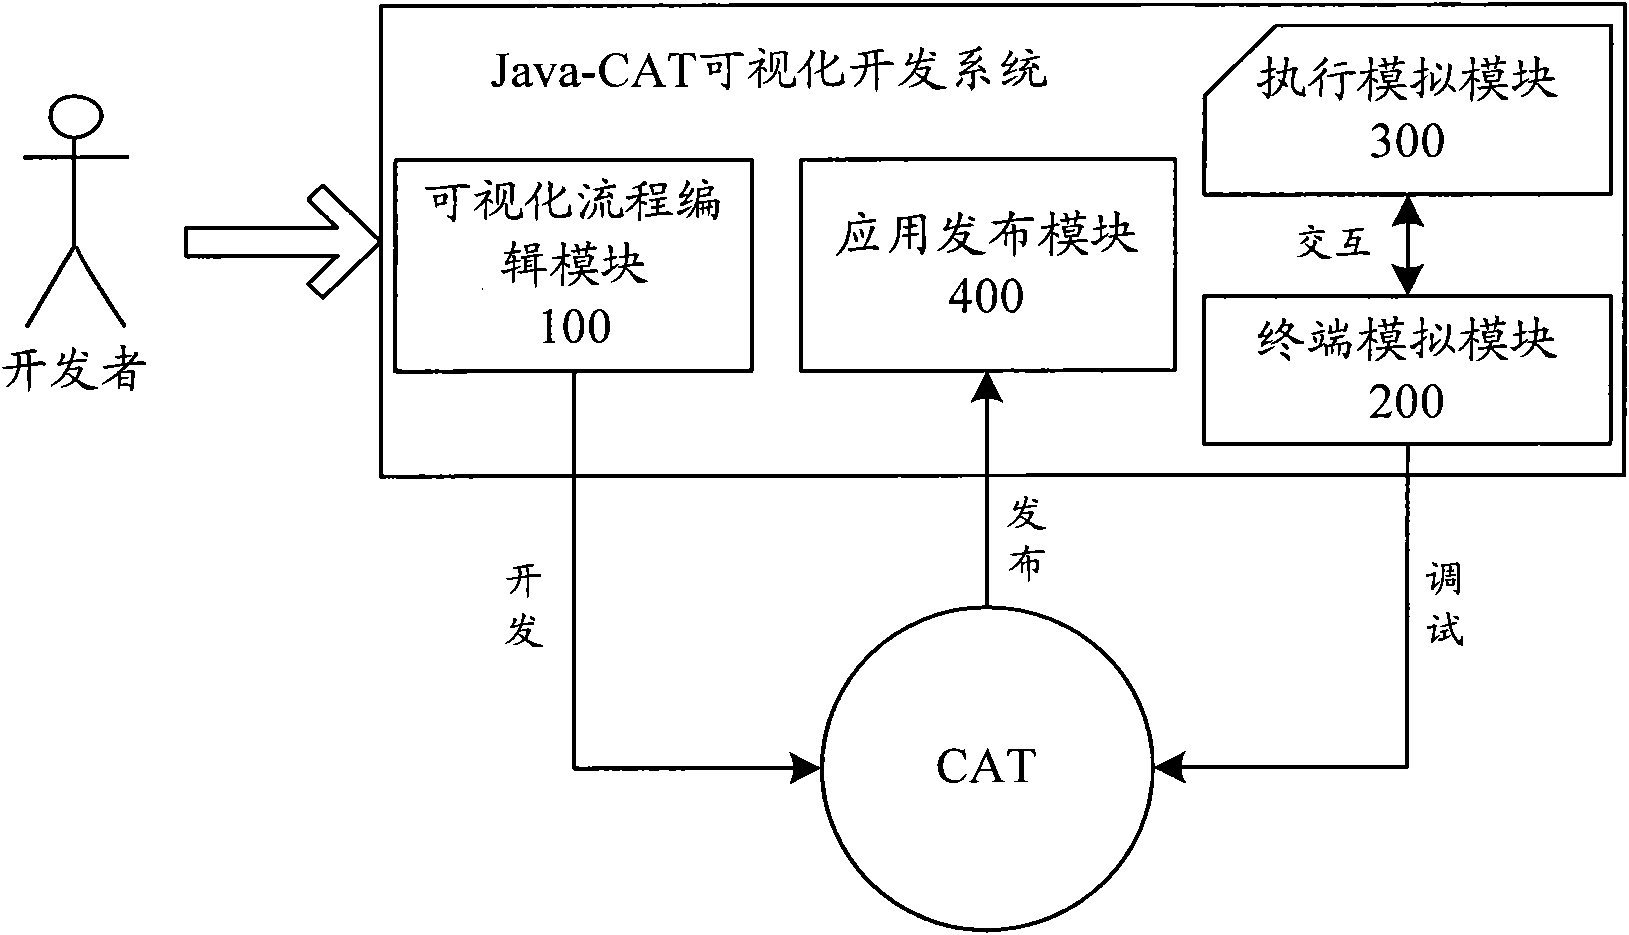 Visual development system and visual development method of Java-card application toolkit (CAT)